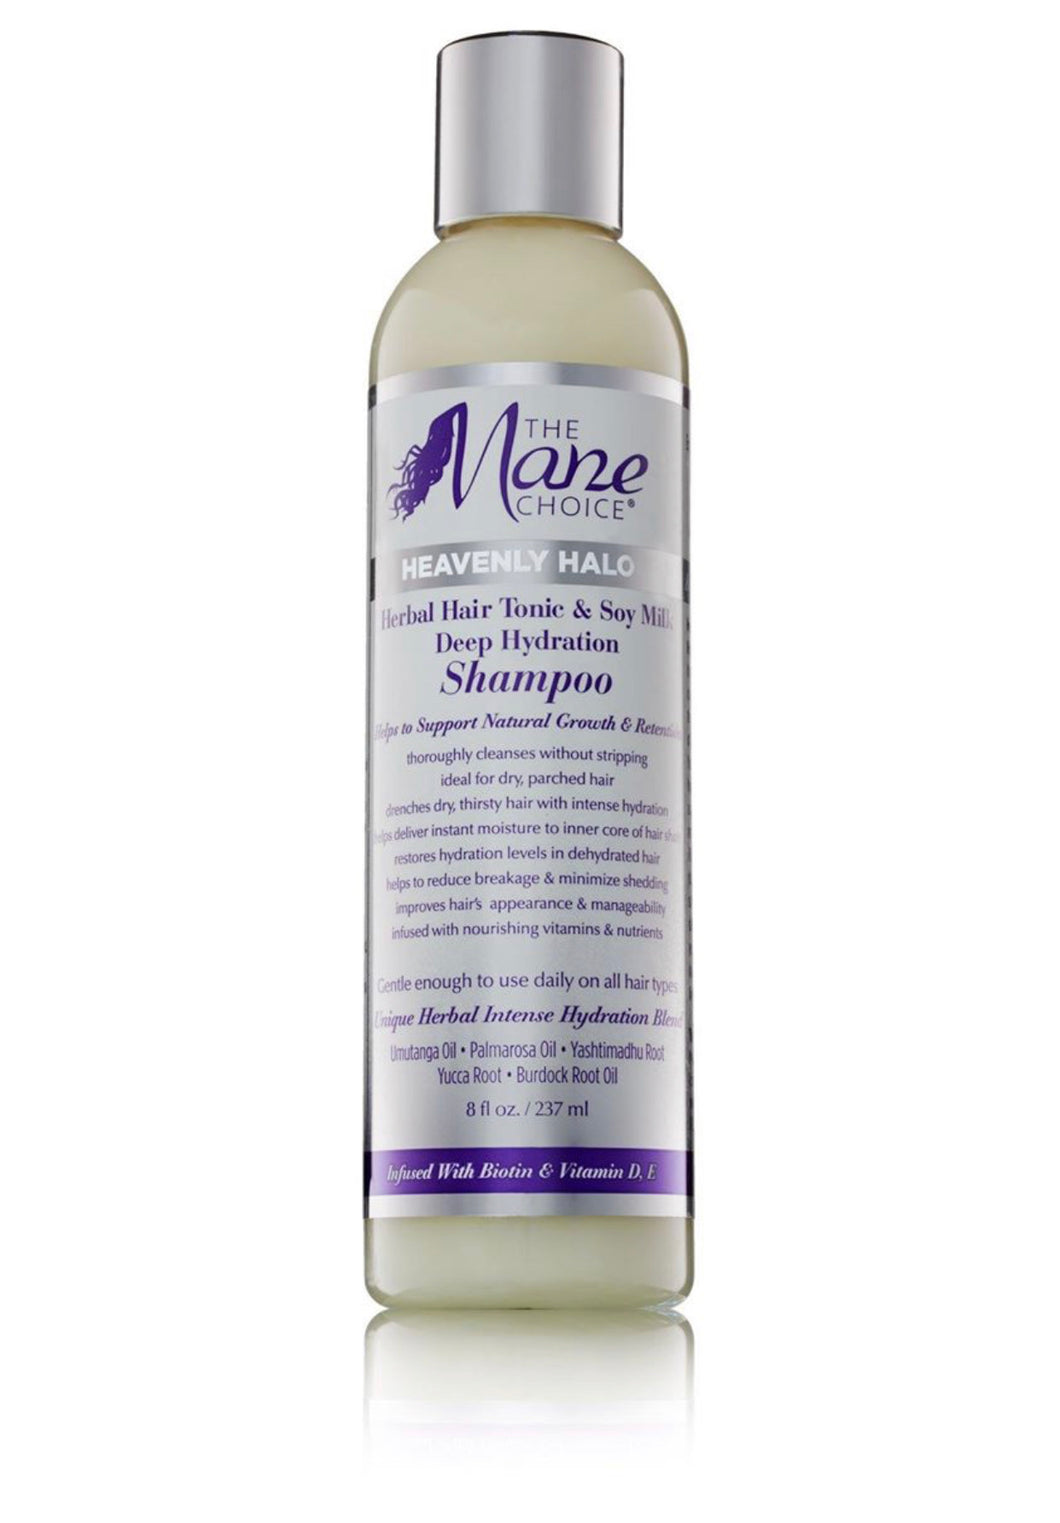 The Mane Choice Hevenly Halo Herbal Hair Tonic & Soy Milk Deep Hydration Shampoo 8 fl oz